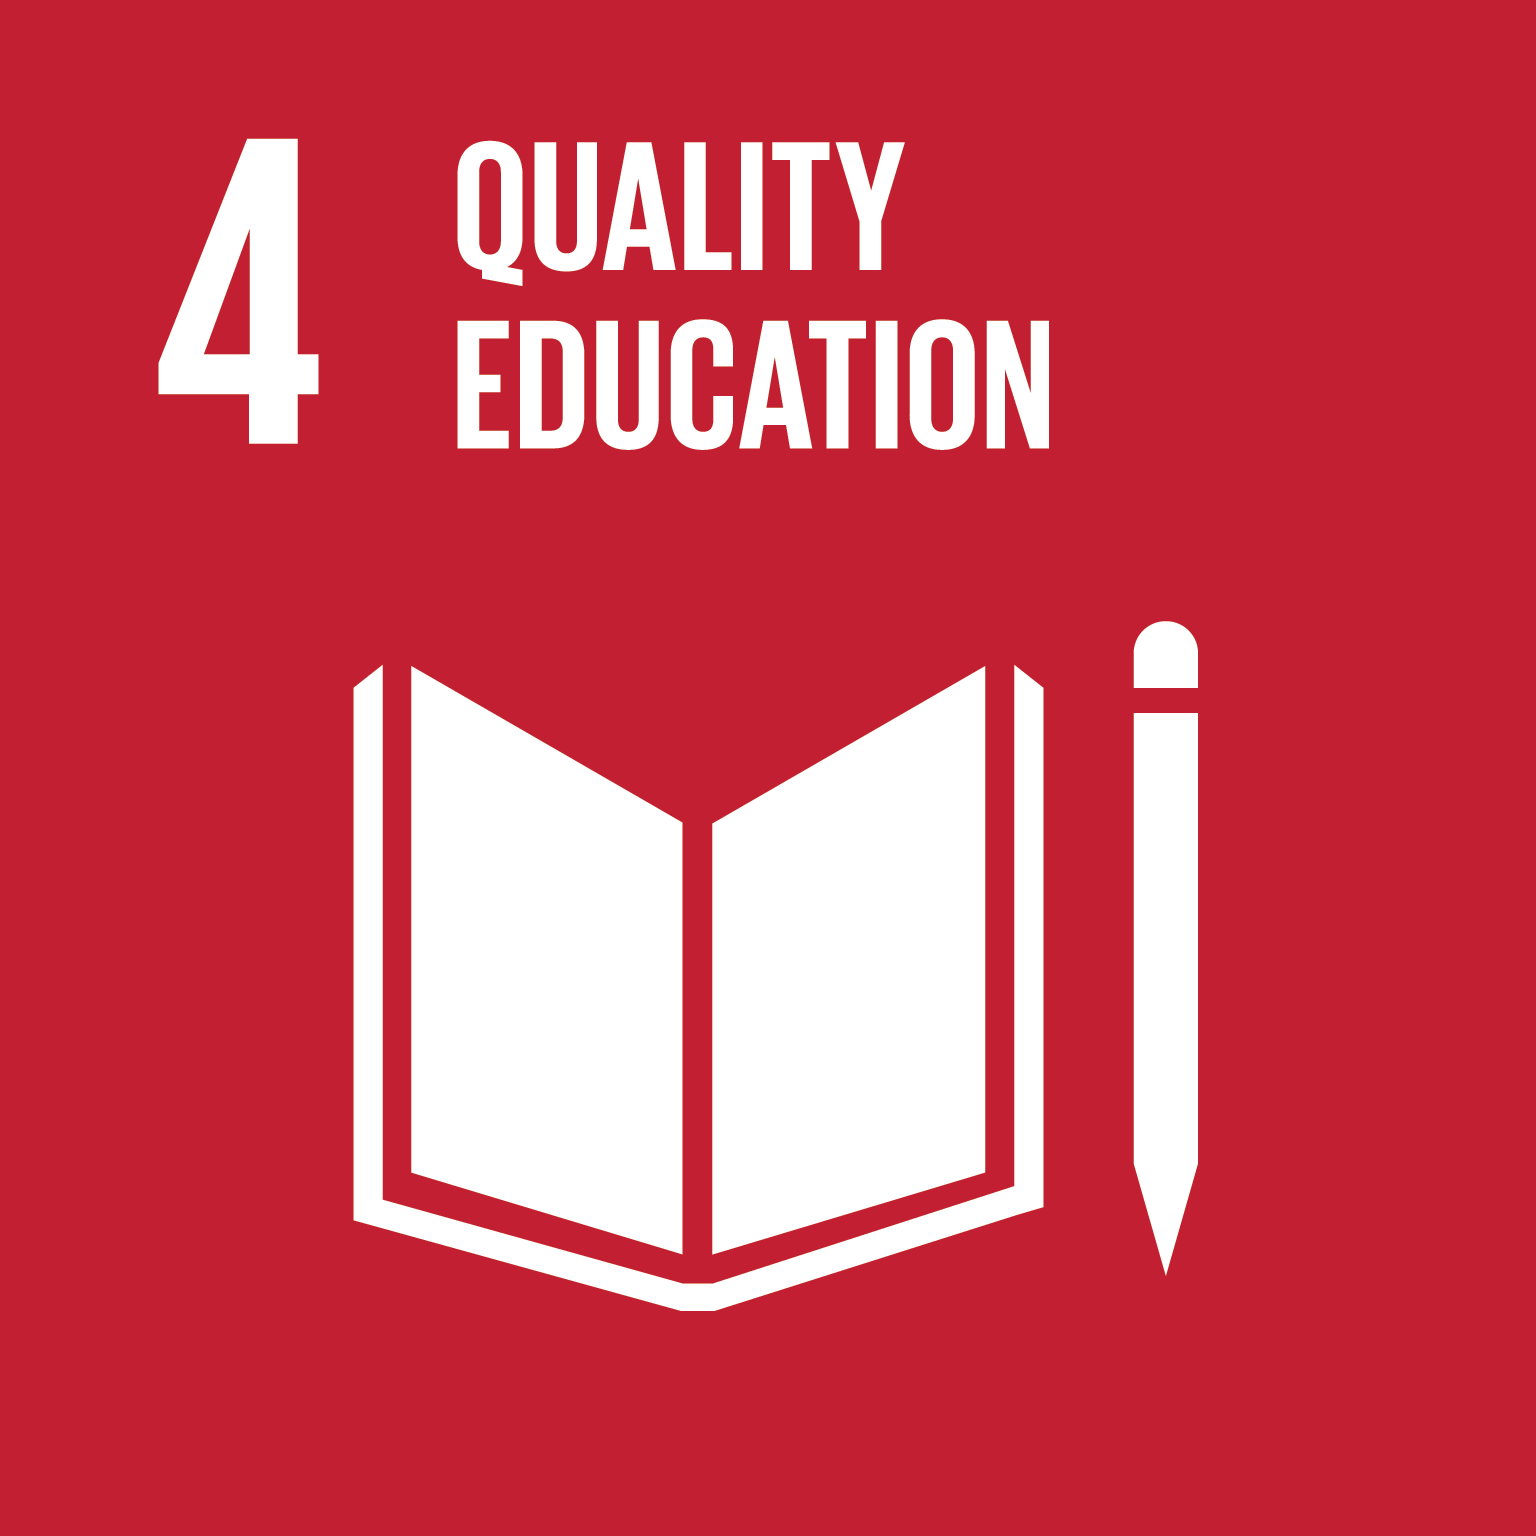 Goal 4 Quality Education